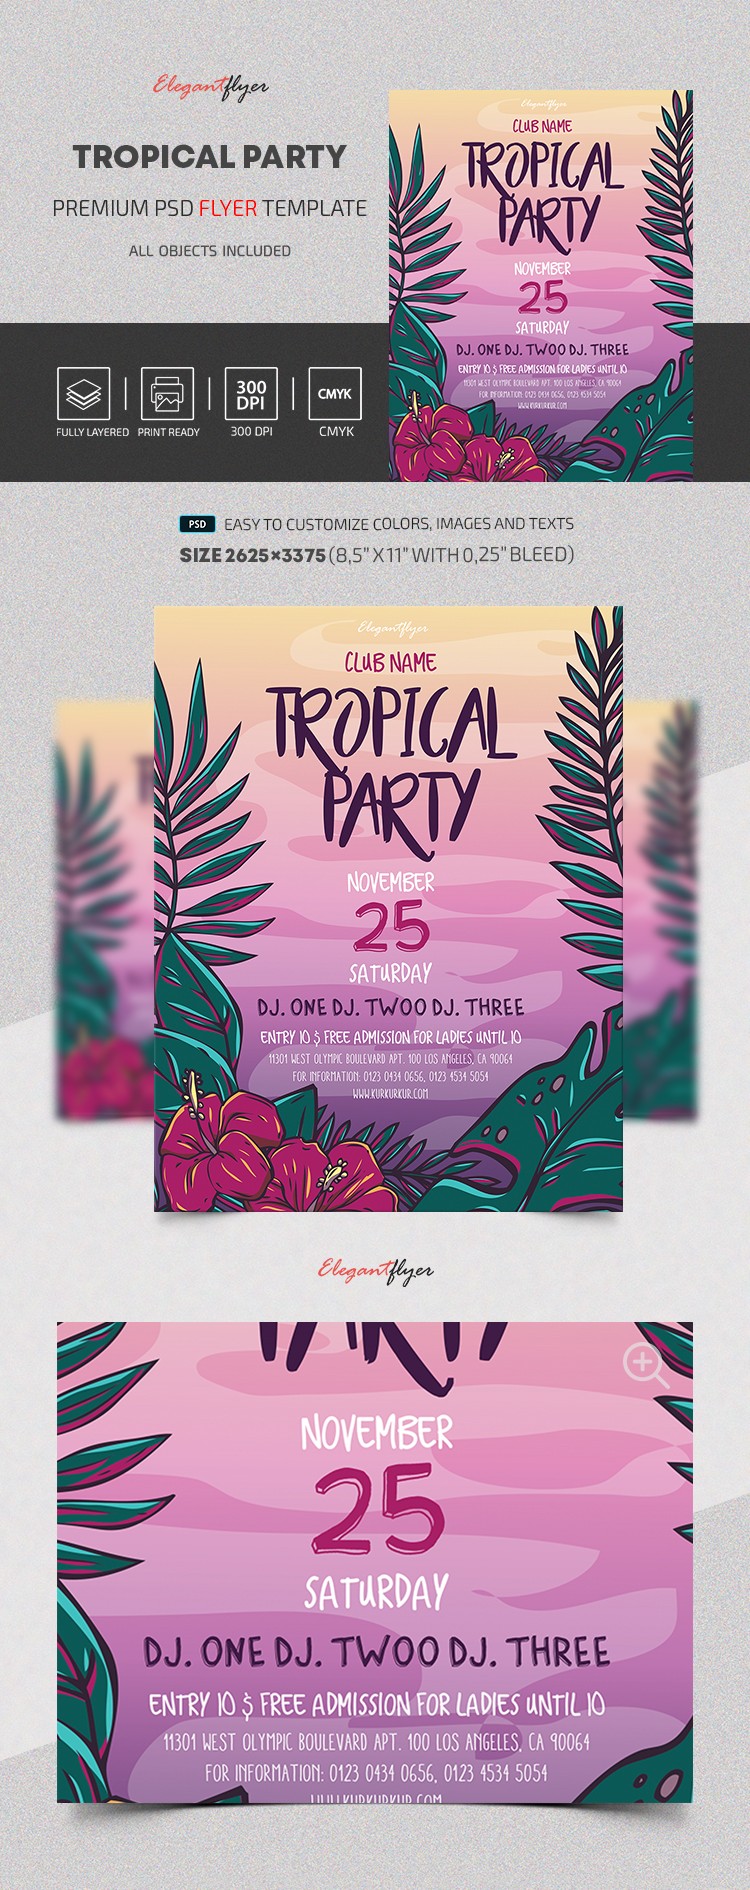 Tropical Party by ElegantFlyer